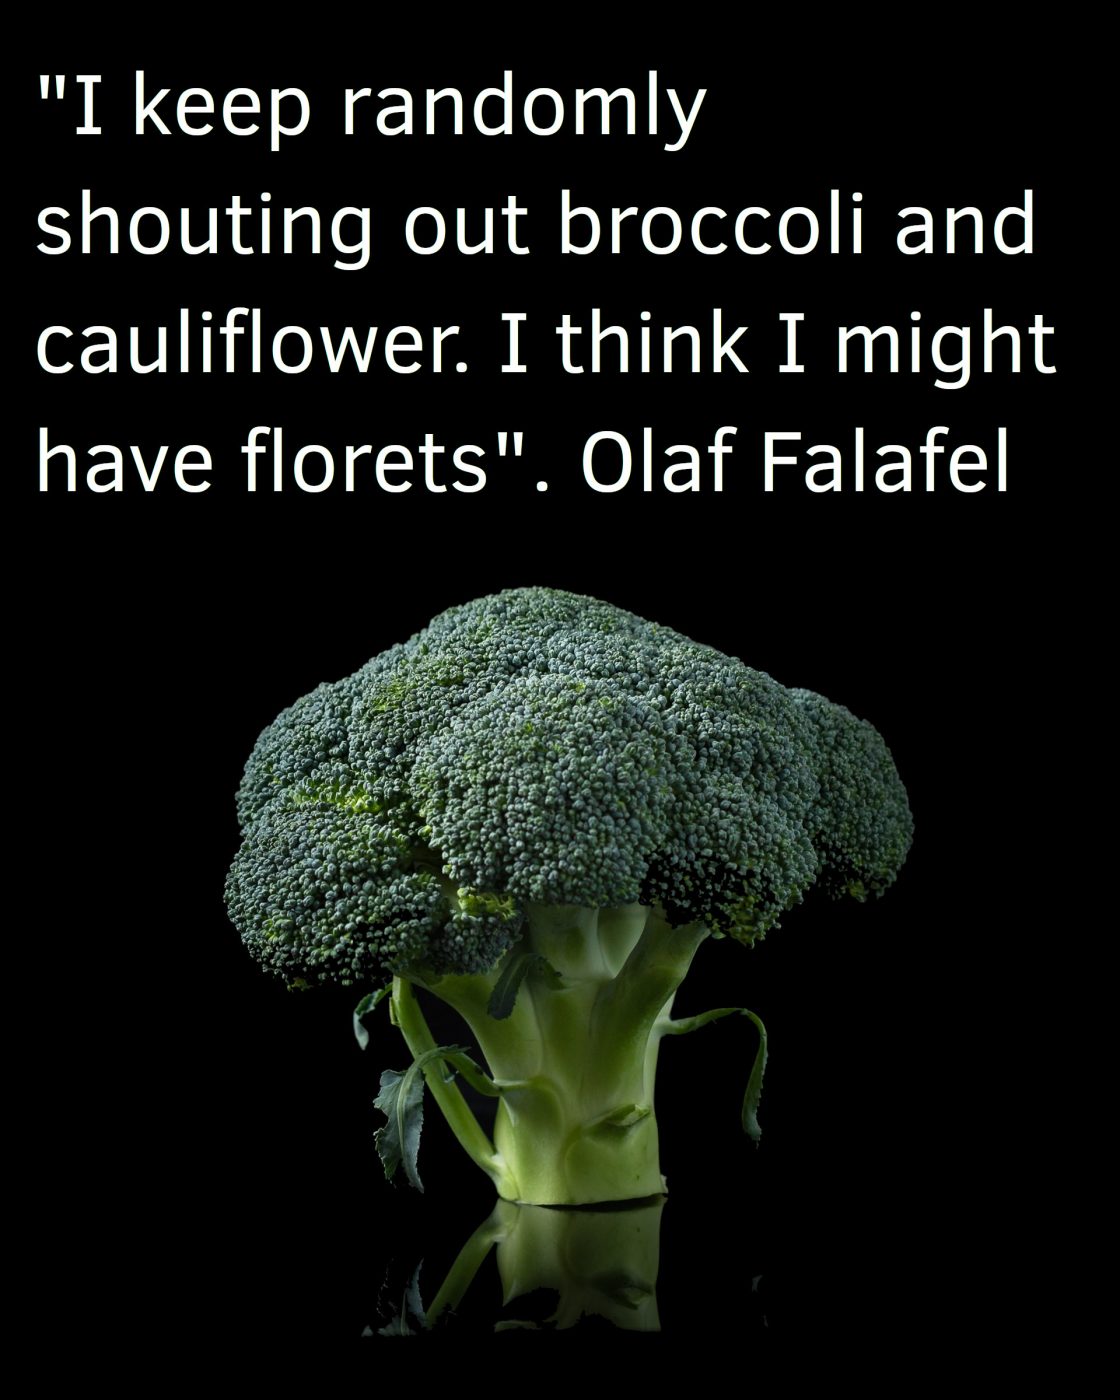 Funny Broccoli Joke About Florets